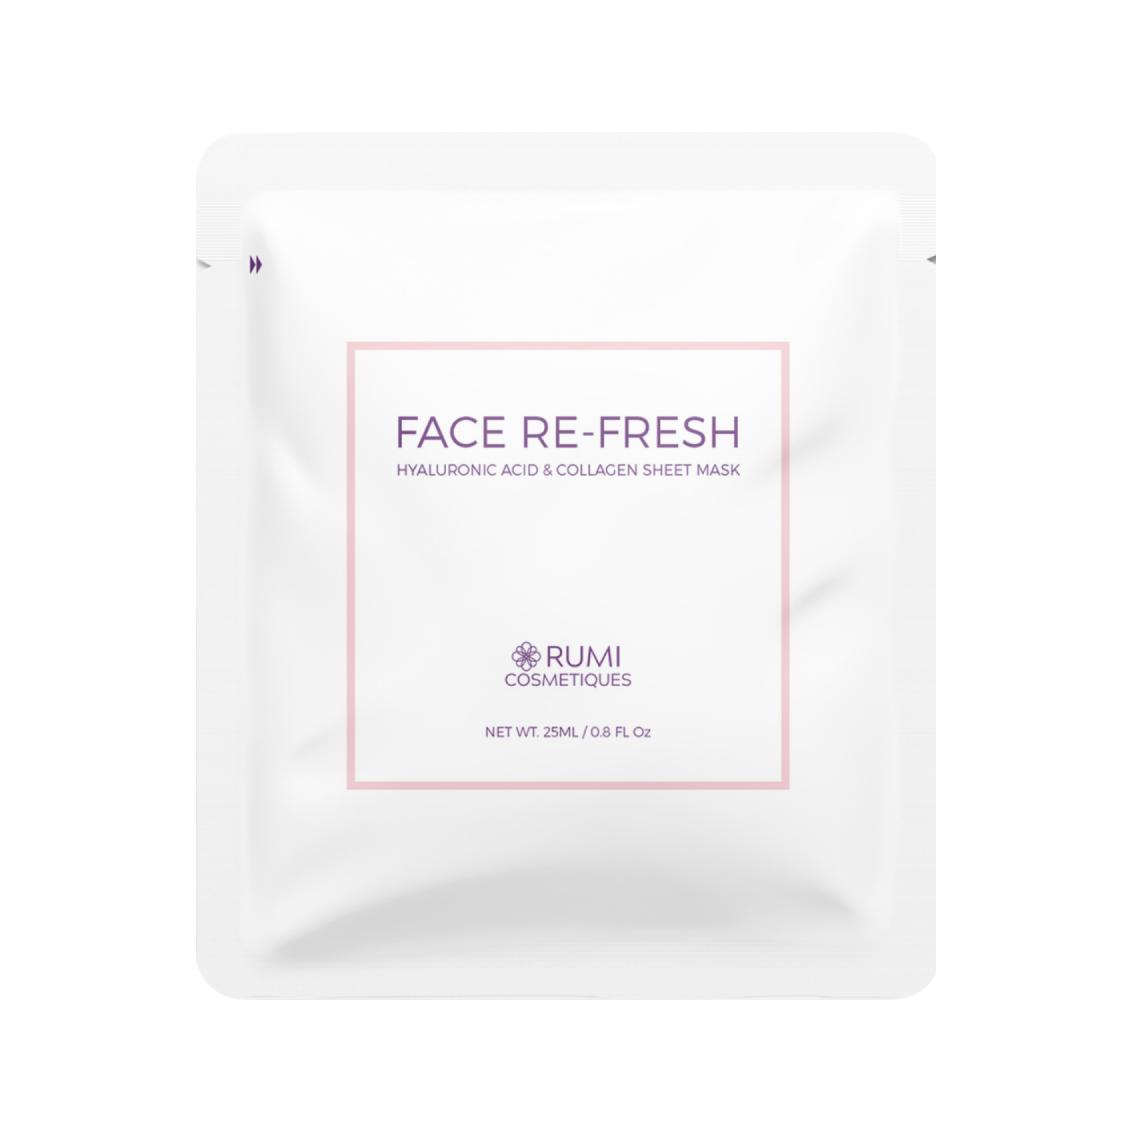 FACE RE-FRESH Hyaluronic Acid & Collagen Sheet Mask